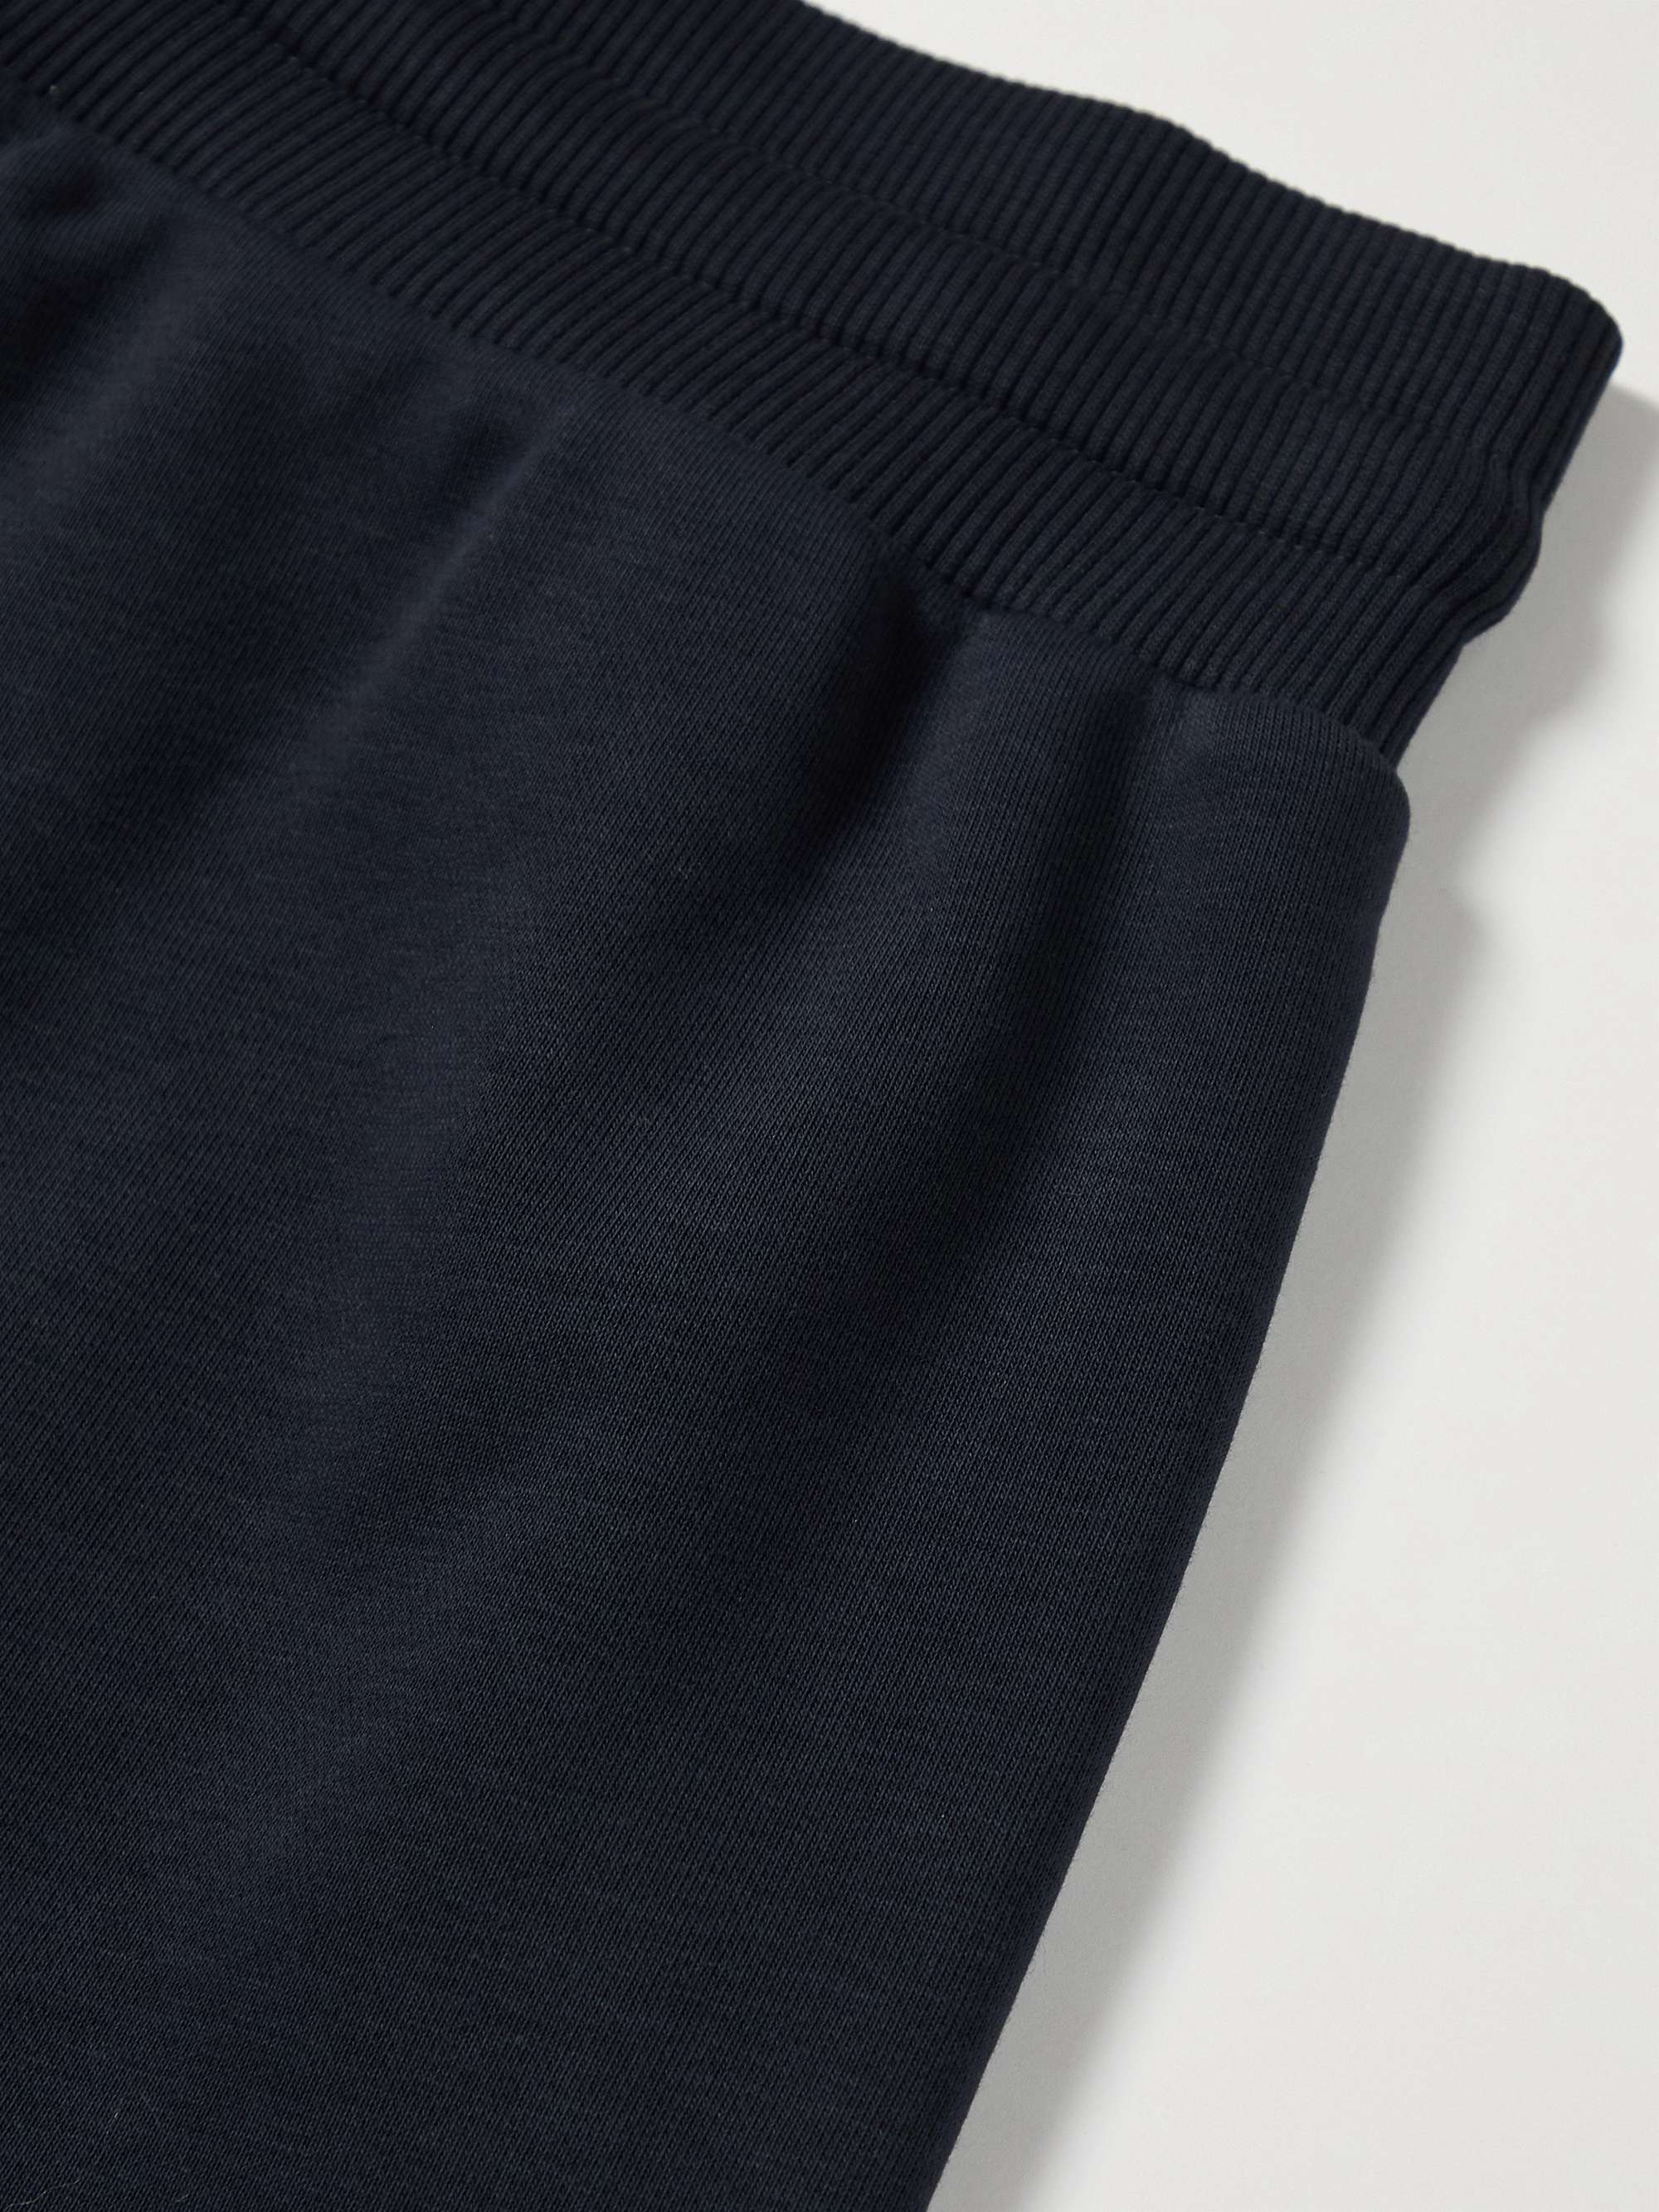 ERMENEGILDO ZEGNA Wide-Leg Cotton-Blend Jersey Drawstring Shorts